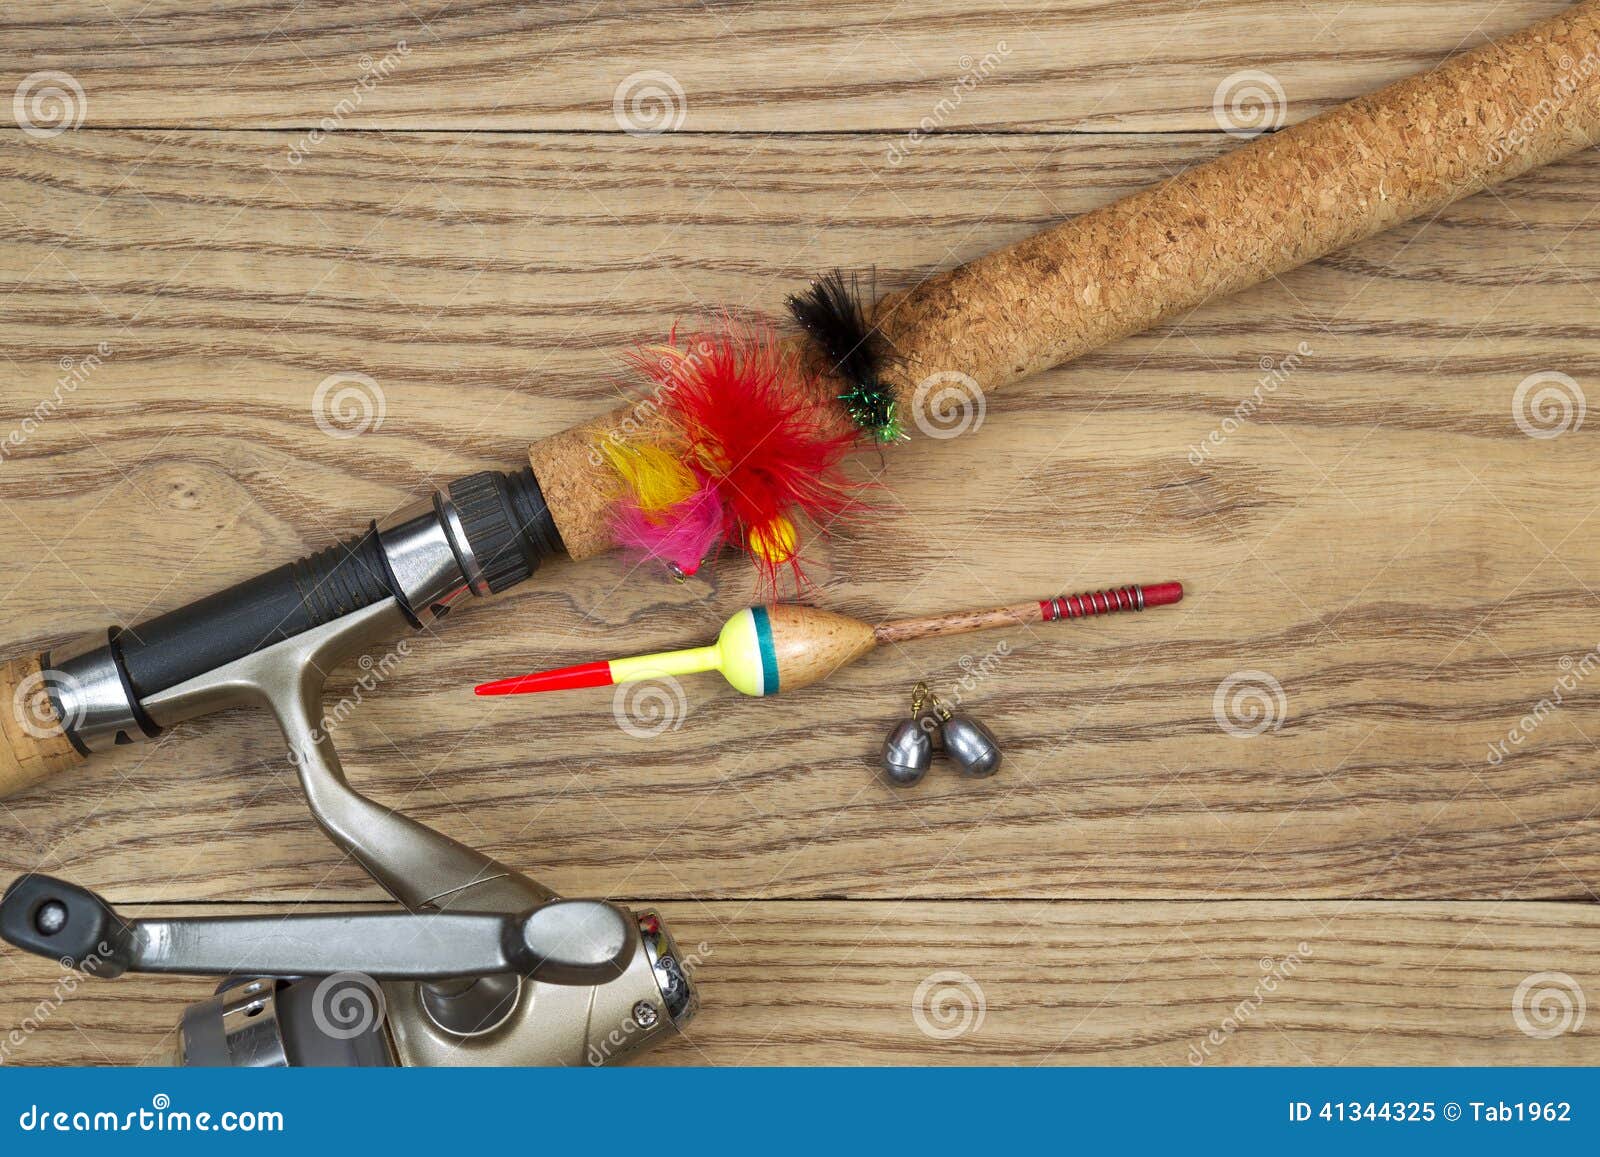 Fishing Equipment on Old Wood Stock Image - Image of jigs, reel: 41344325